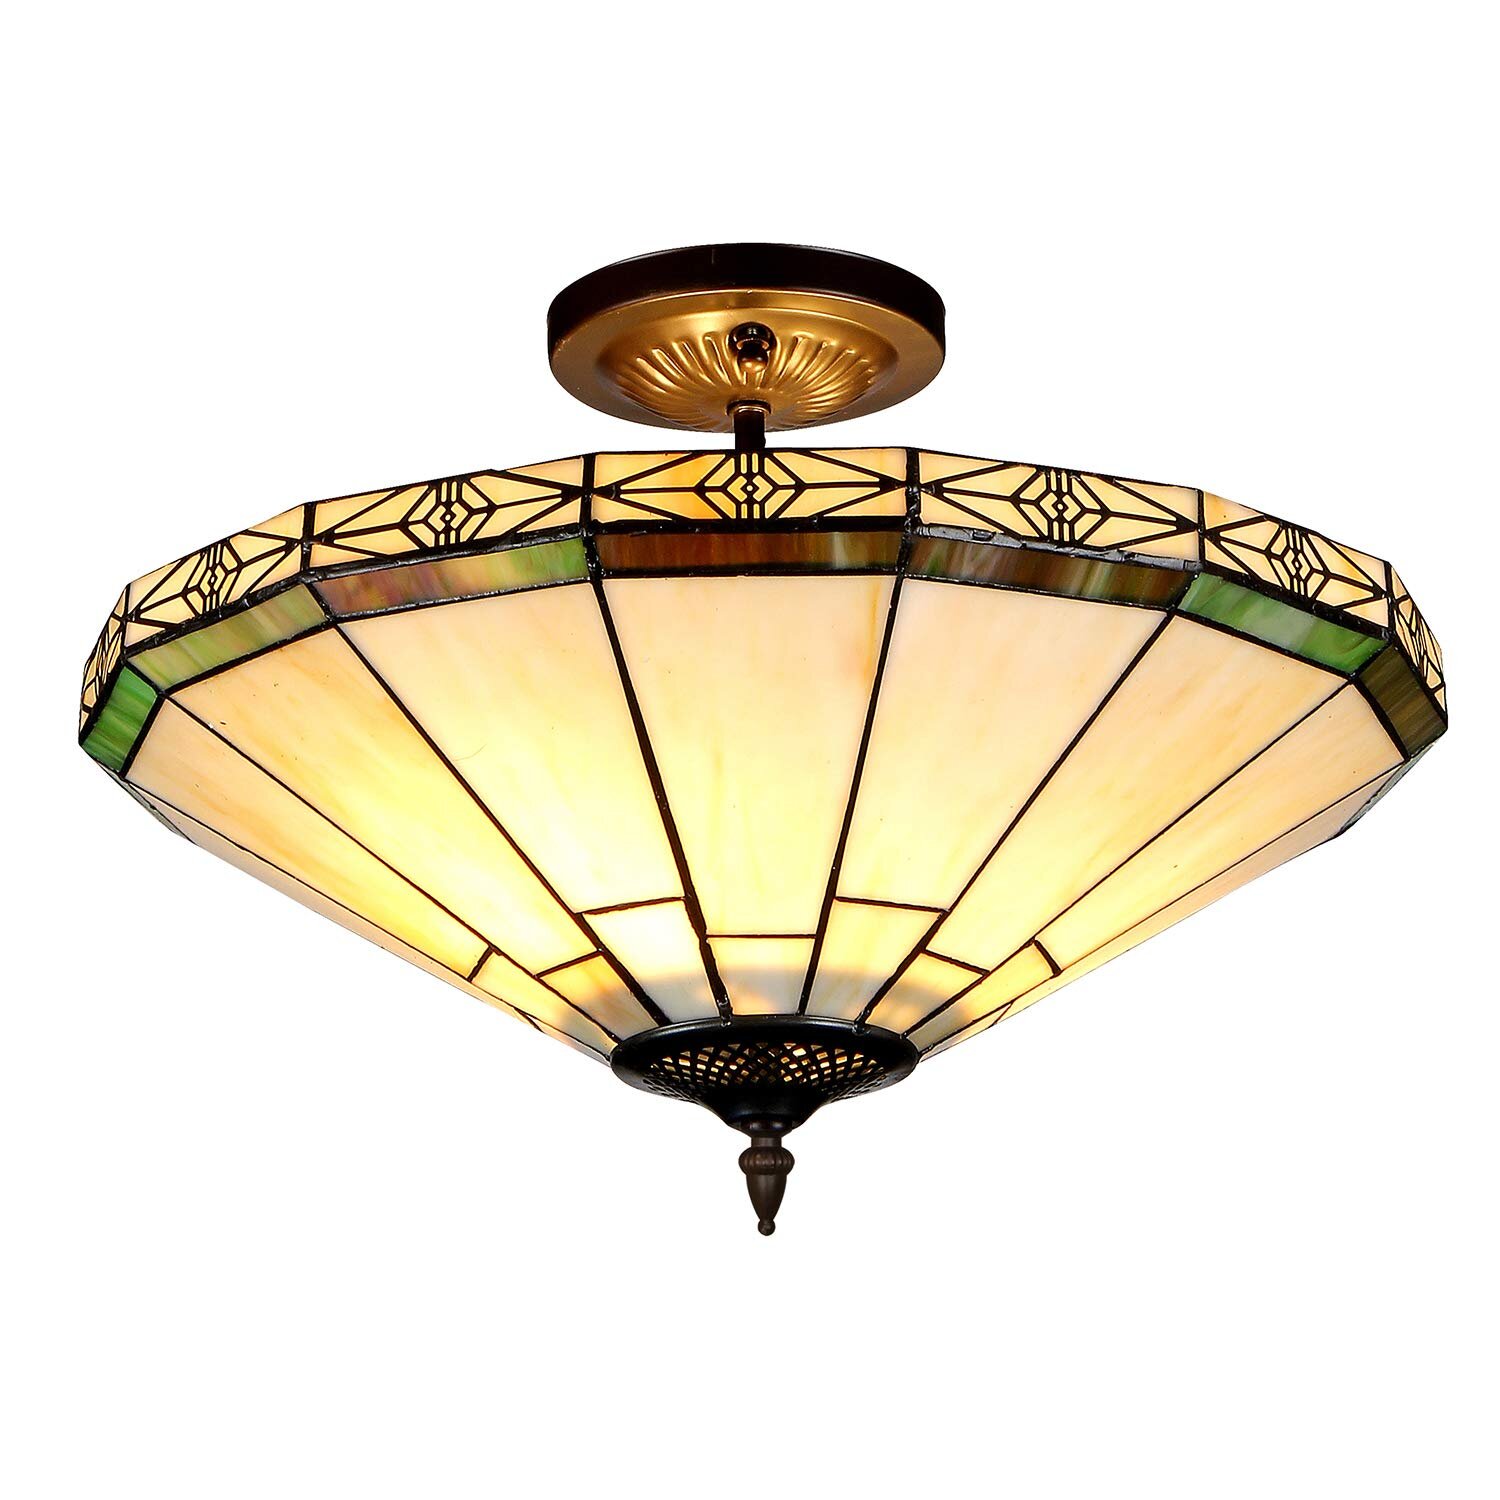 Chloe Tiffany Style Mission Design 2-light Table Lamp 